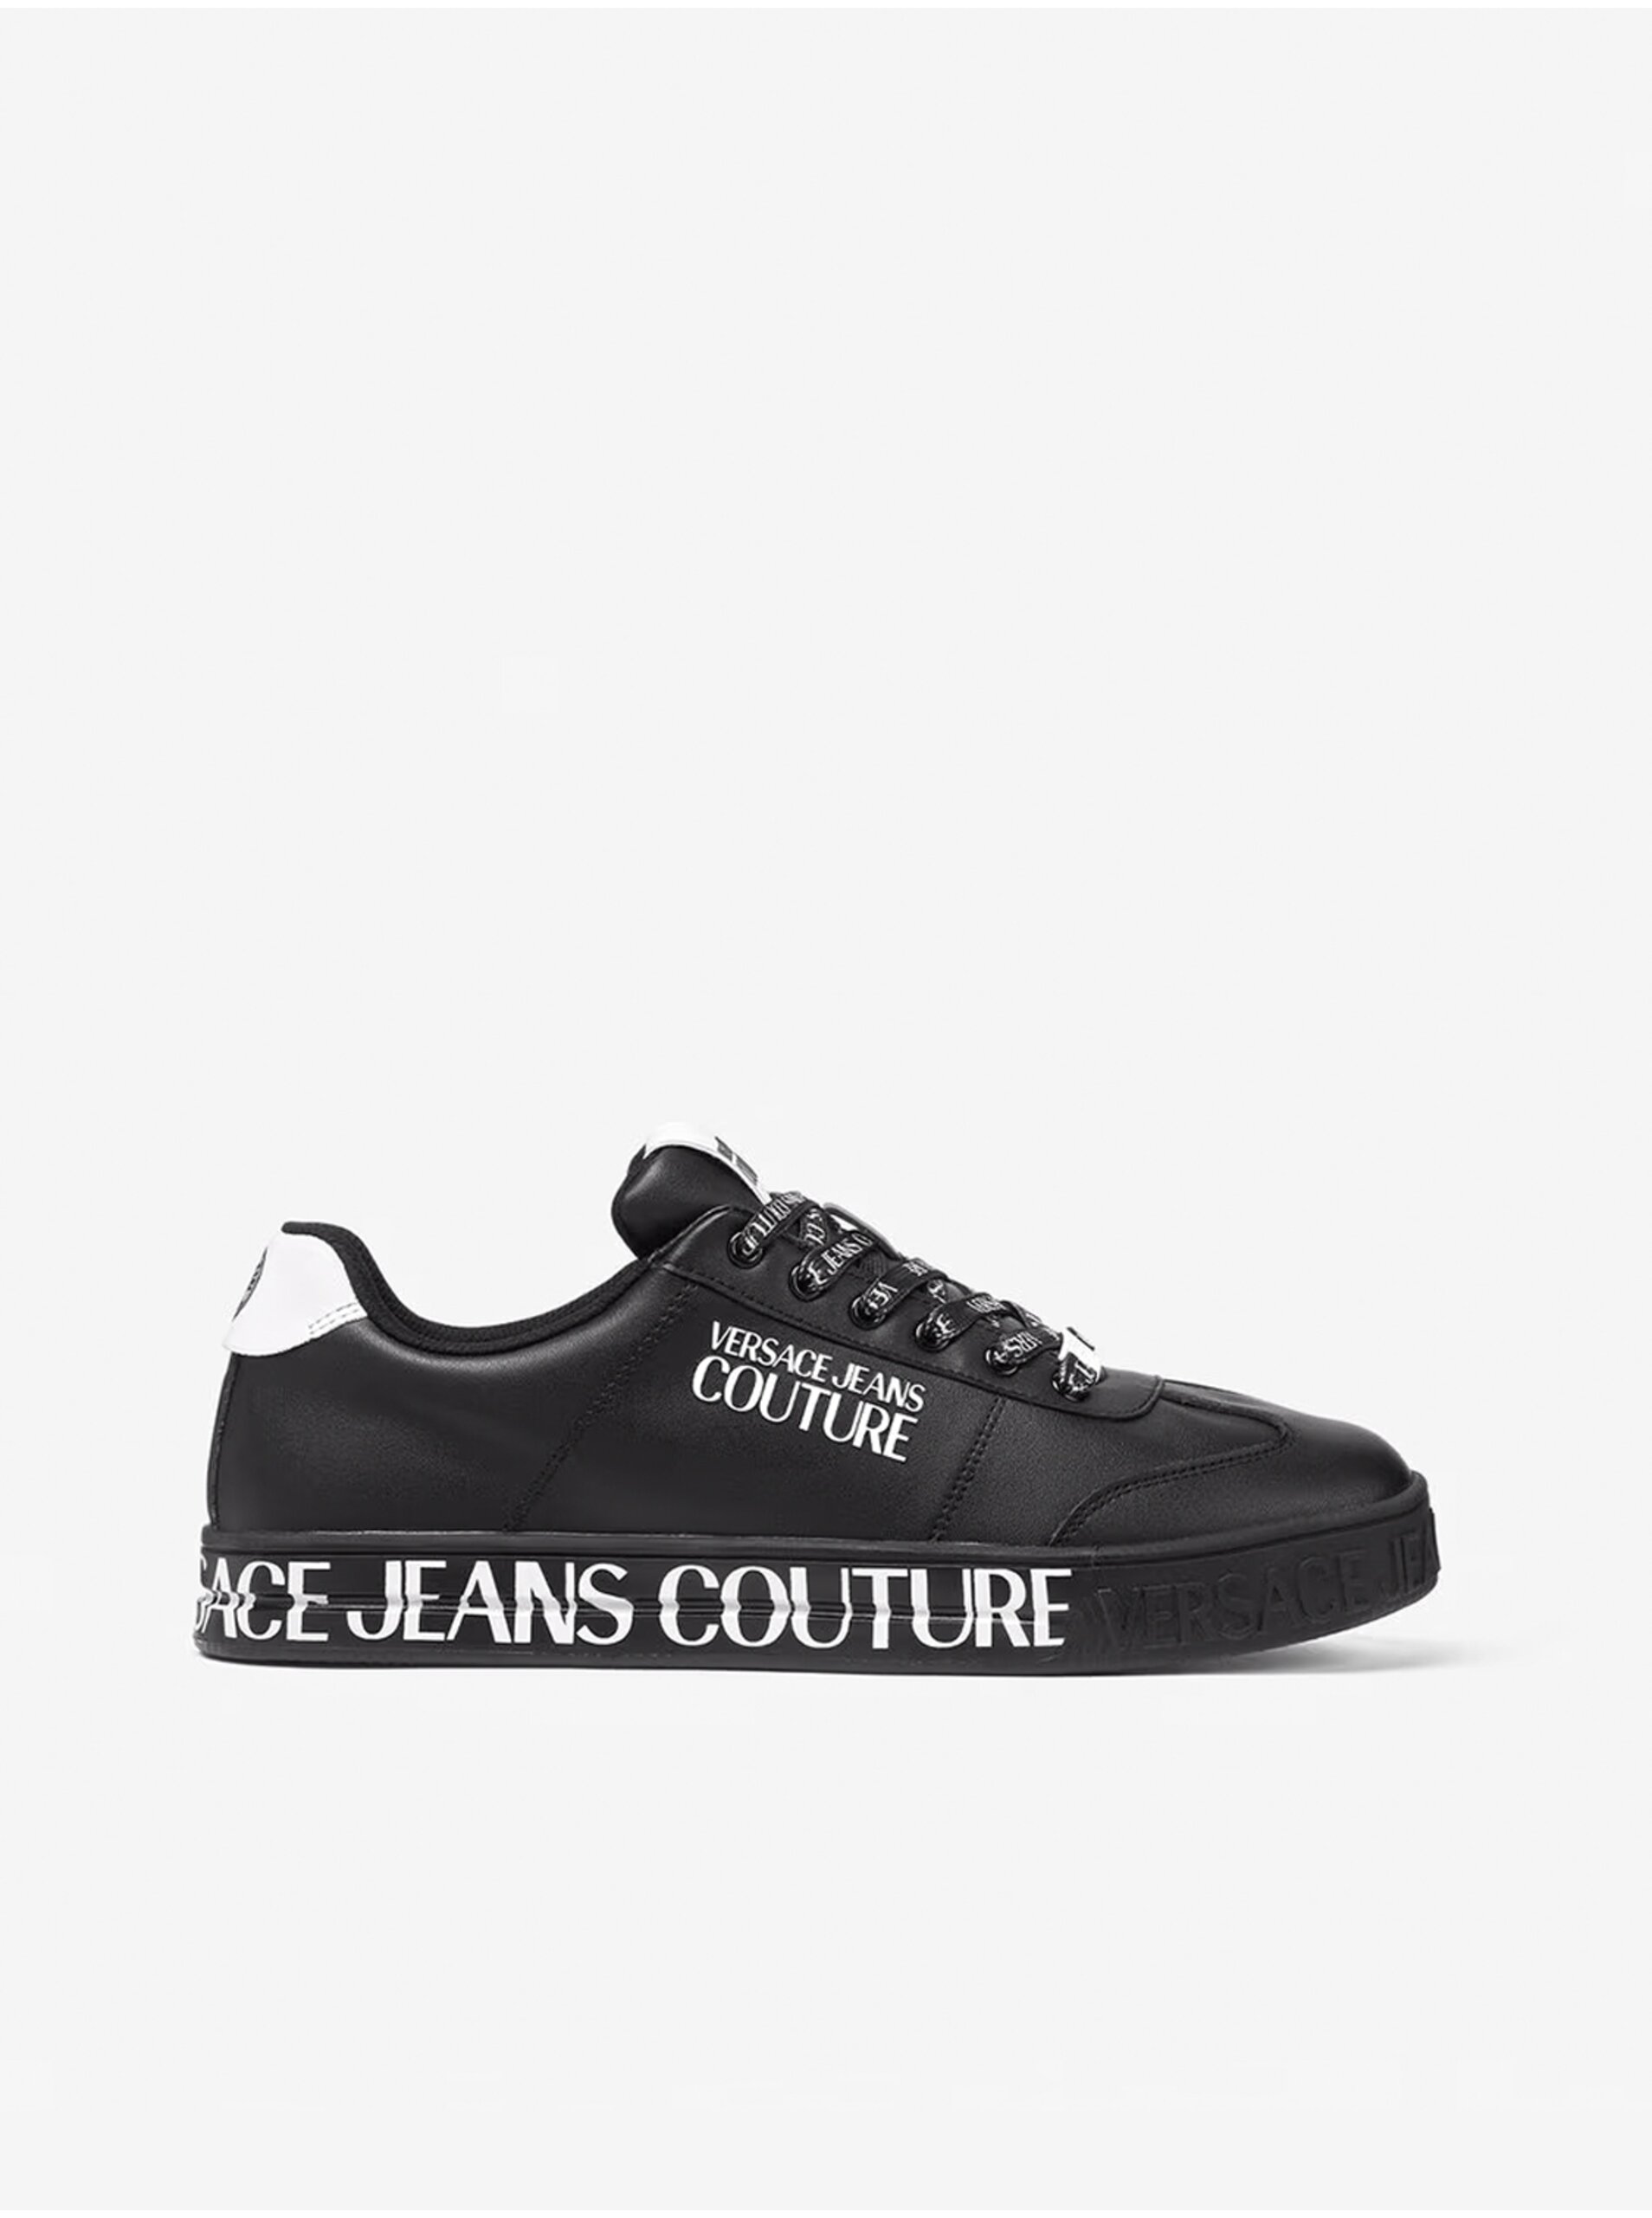 Black Men's Versace Jeans Couture Fondo Court 88 Leather Sneakers - Men's